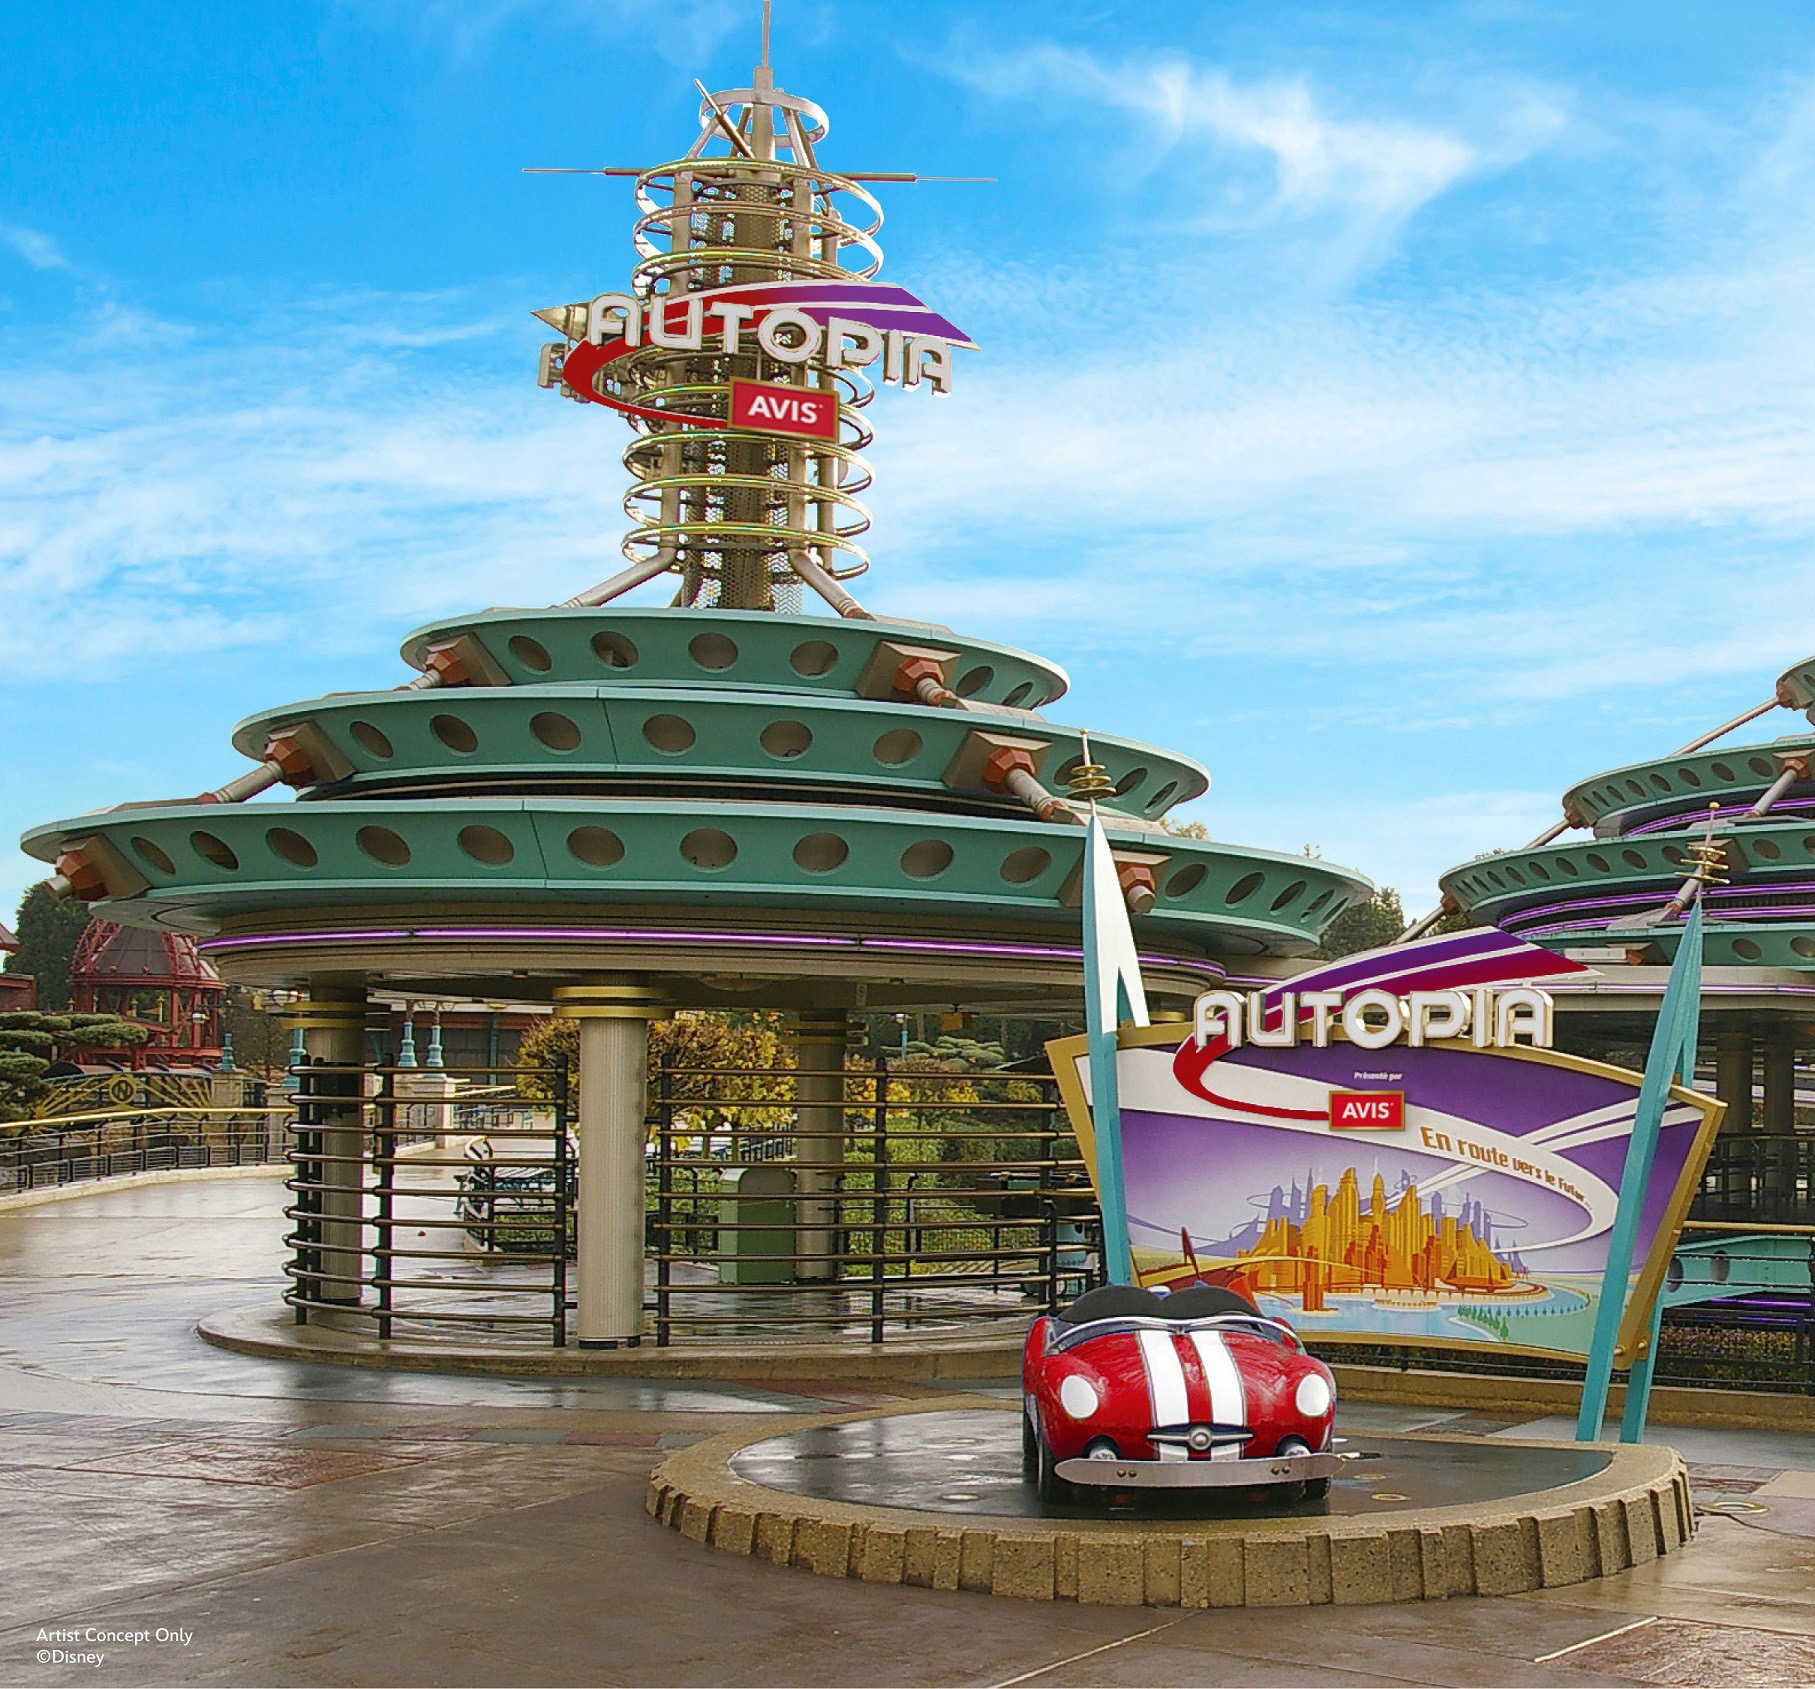 Driver Licences Return to Autopia with new Avis partnership with Disneyland Paris